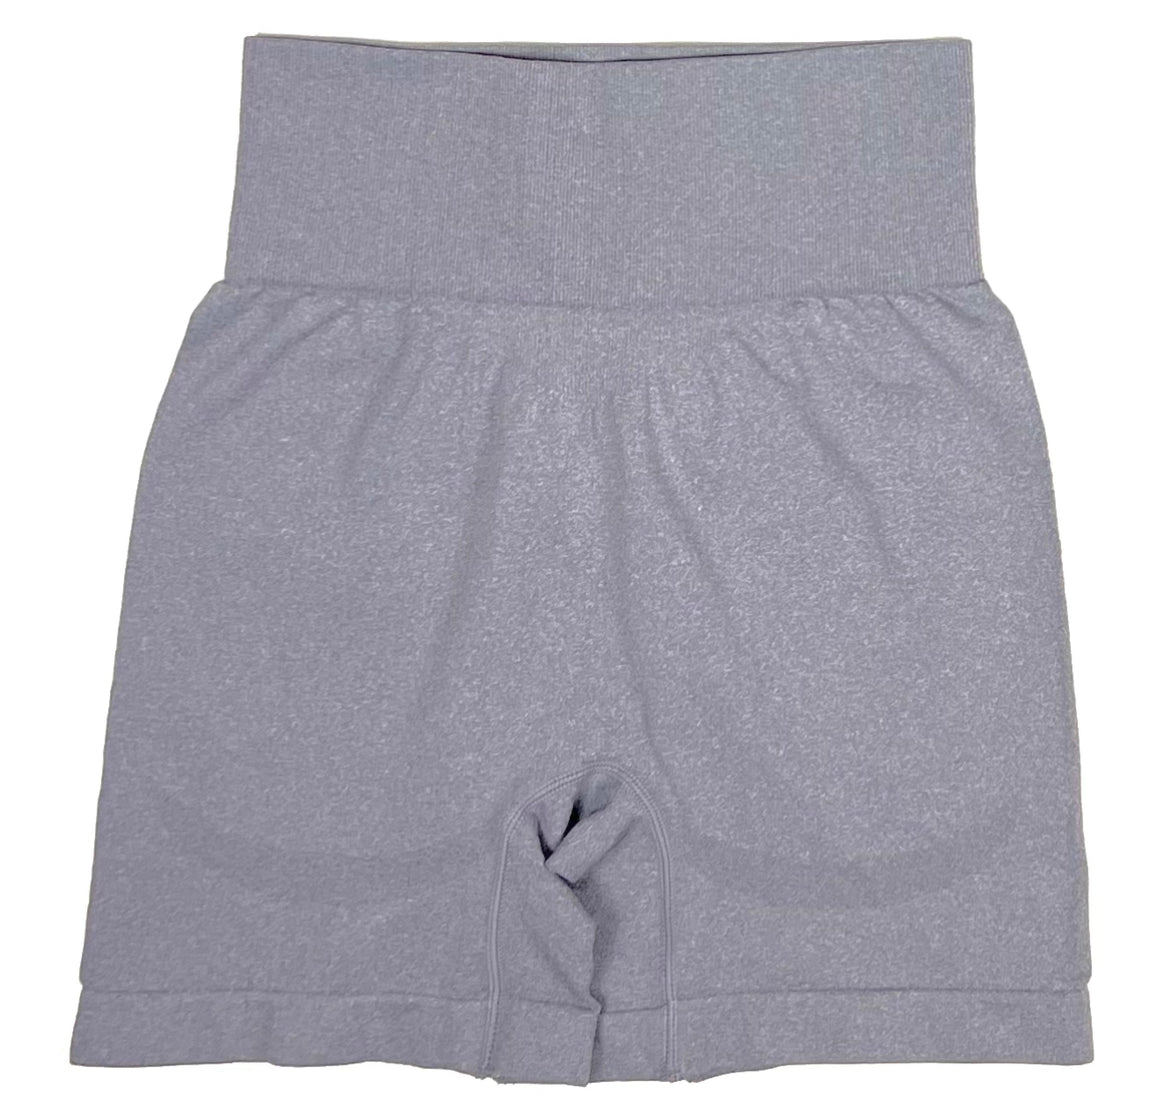 NB Women's Seamless Shorts